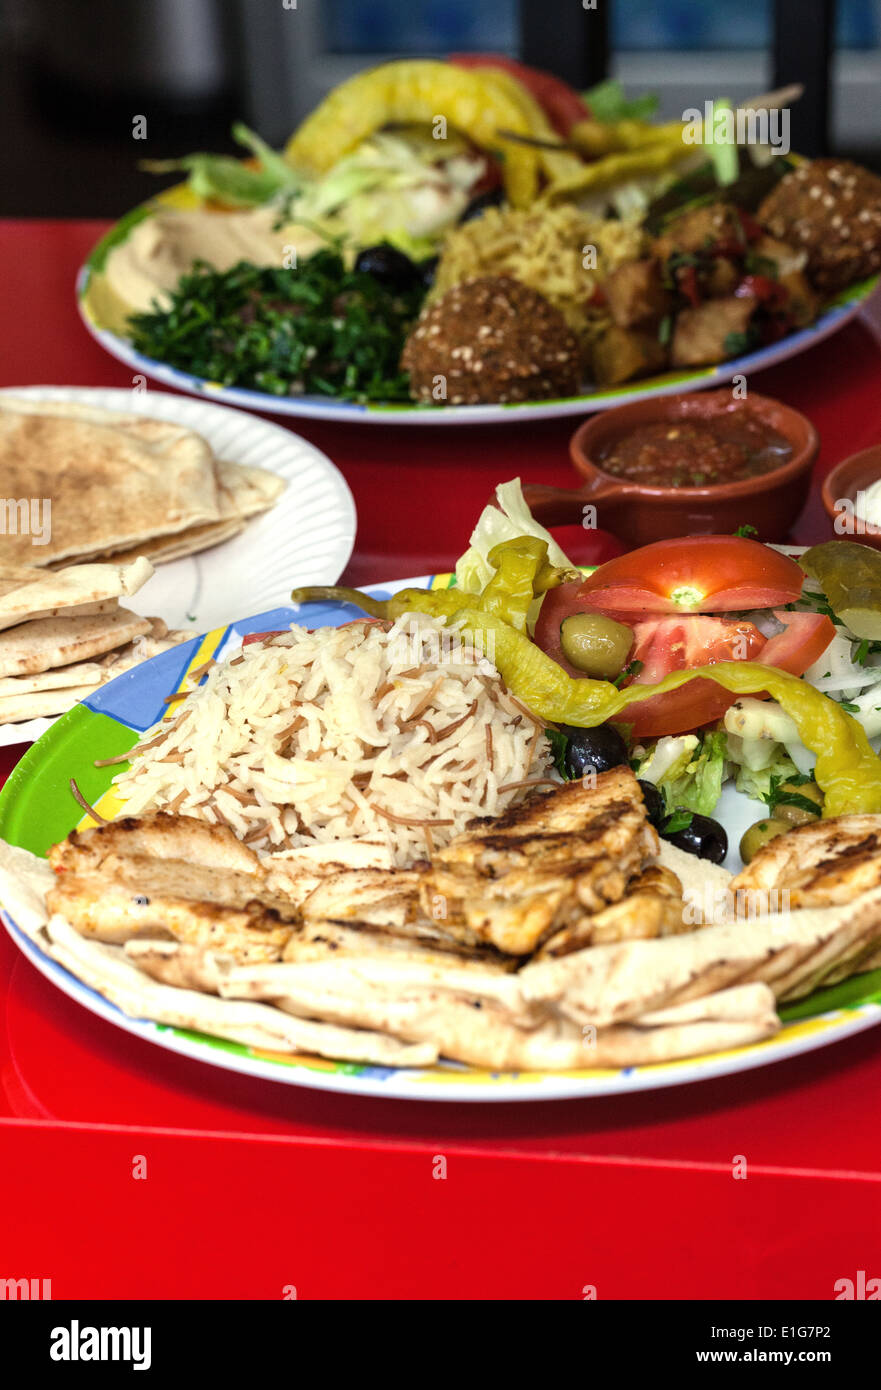 Lebanese food served on plates Stock Photo